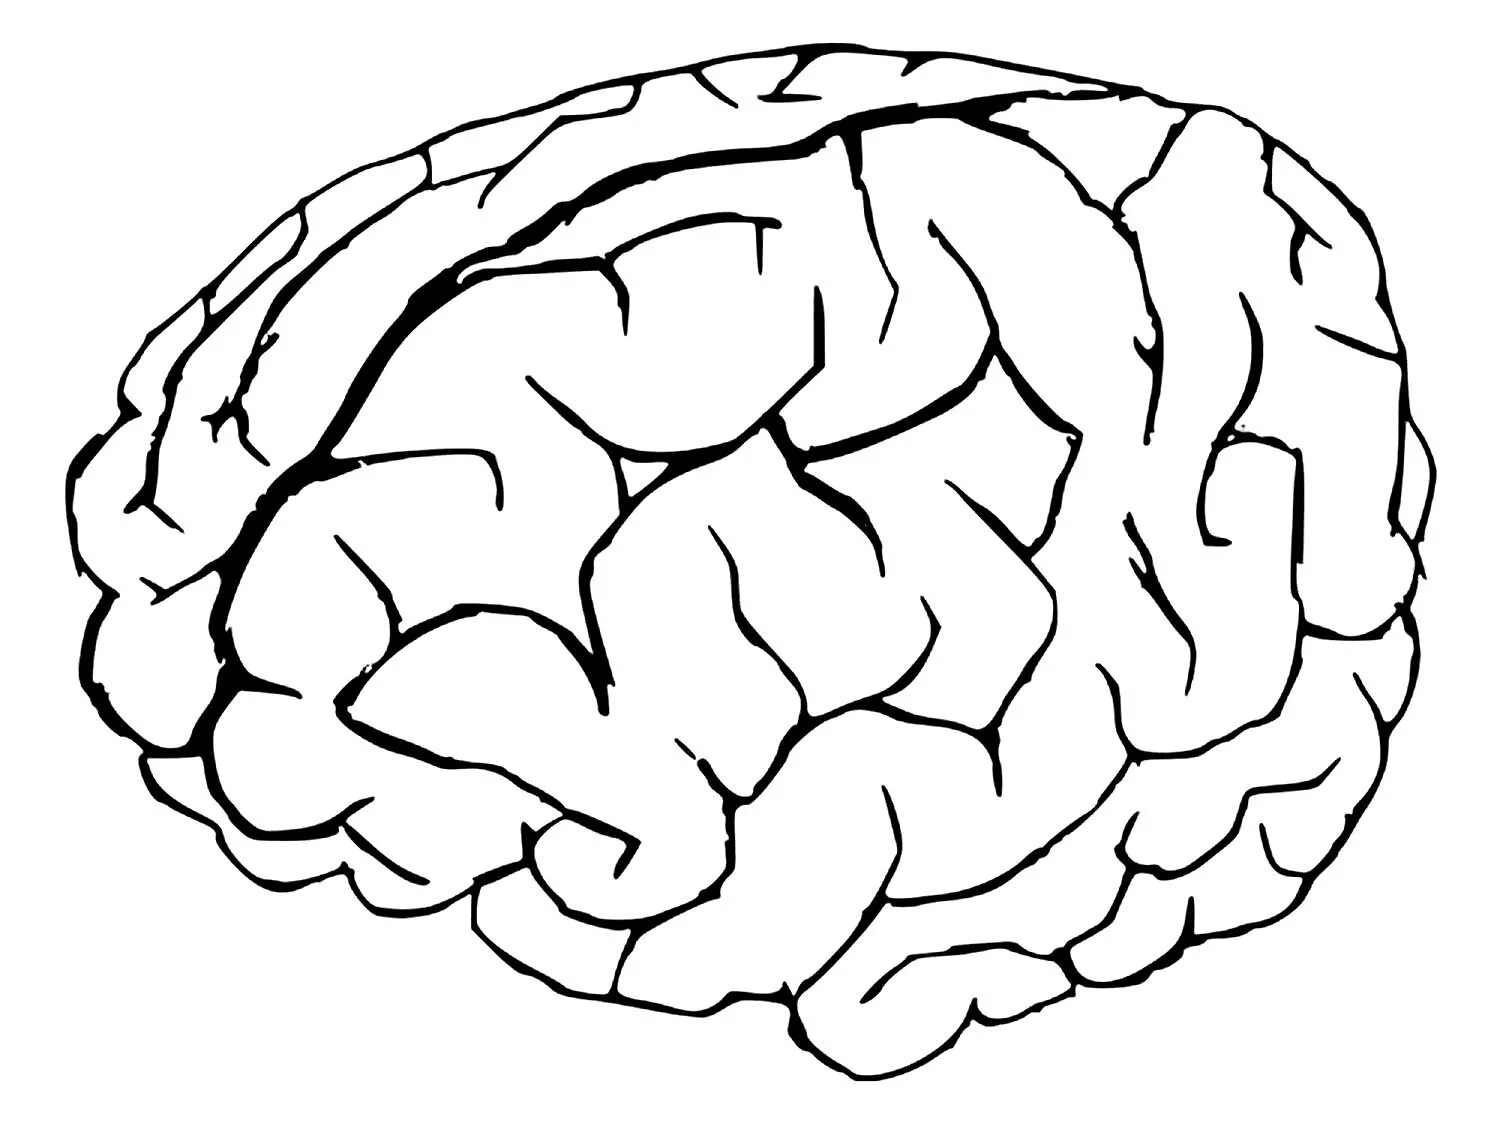 Human brain for children #23